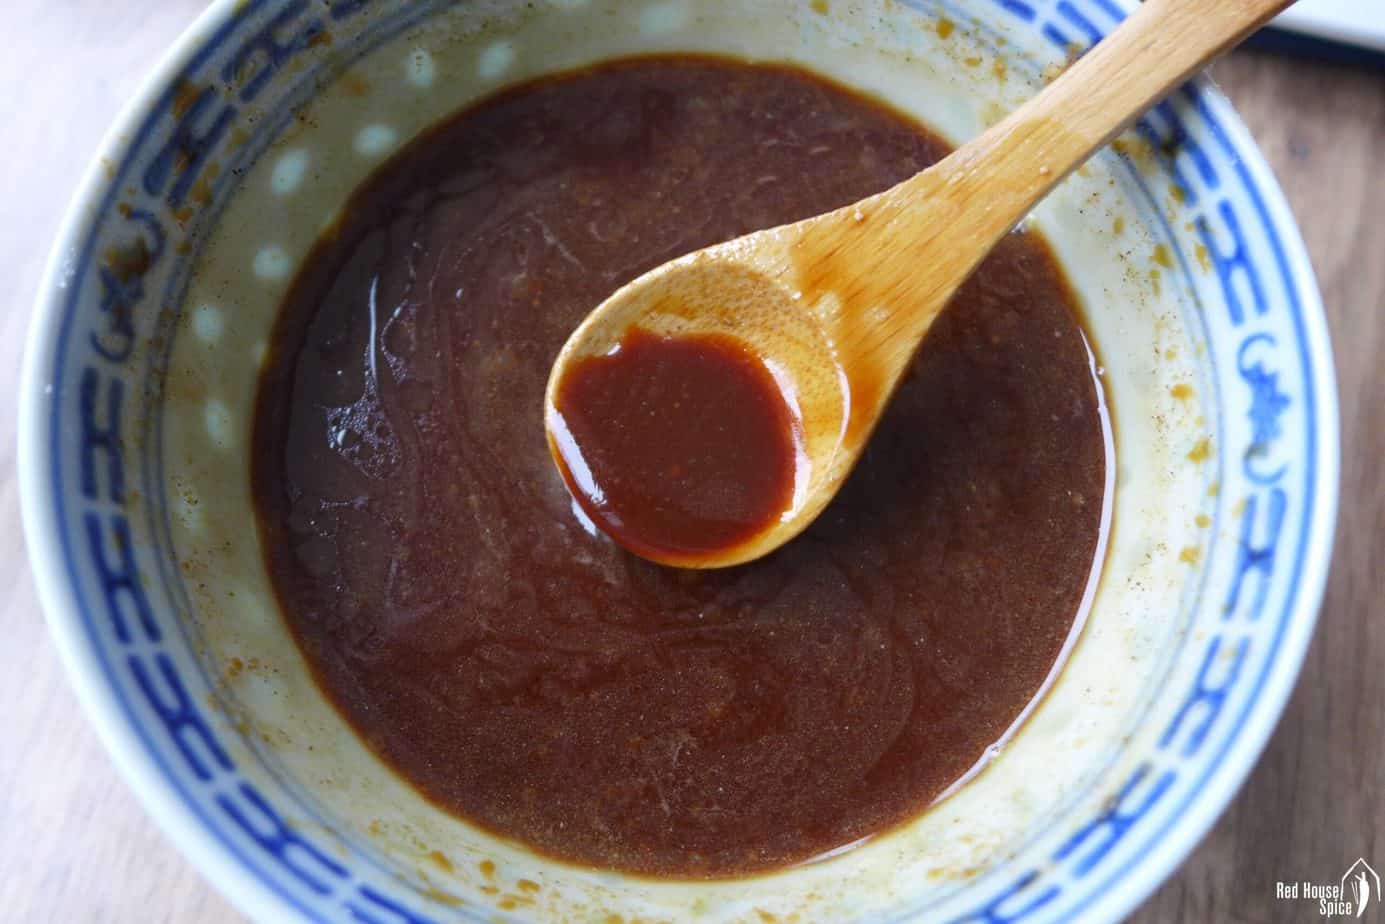 Stir-fry sauce in a bowl